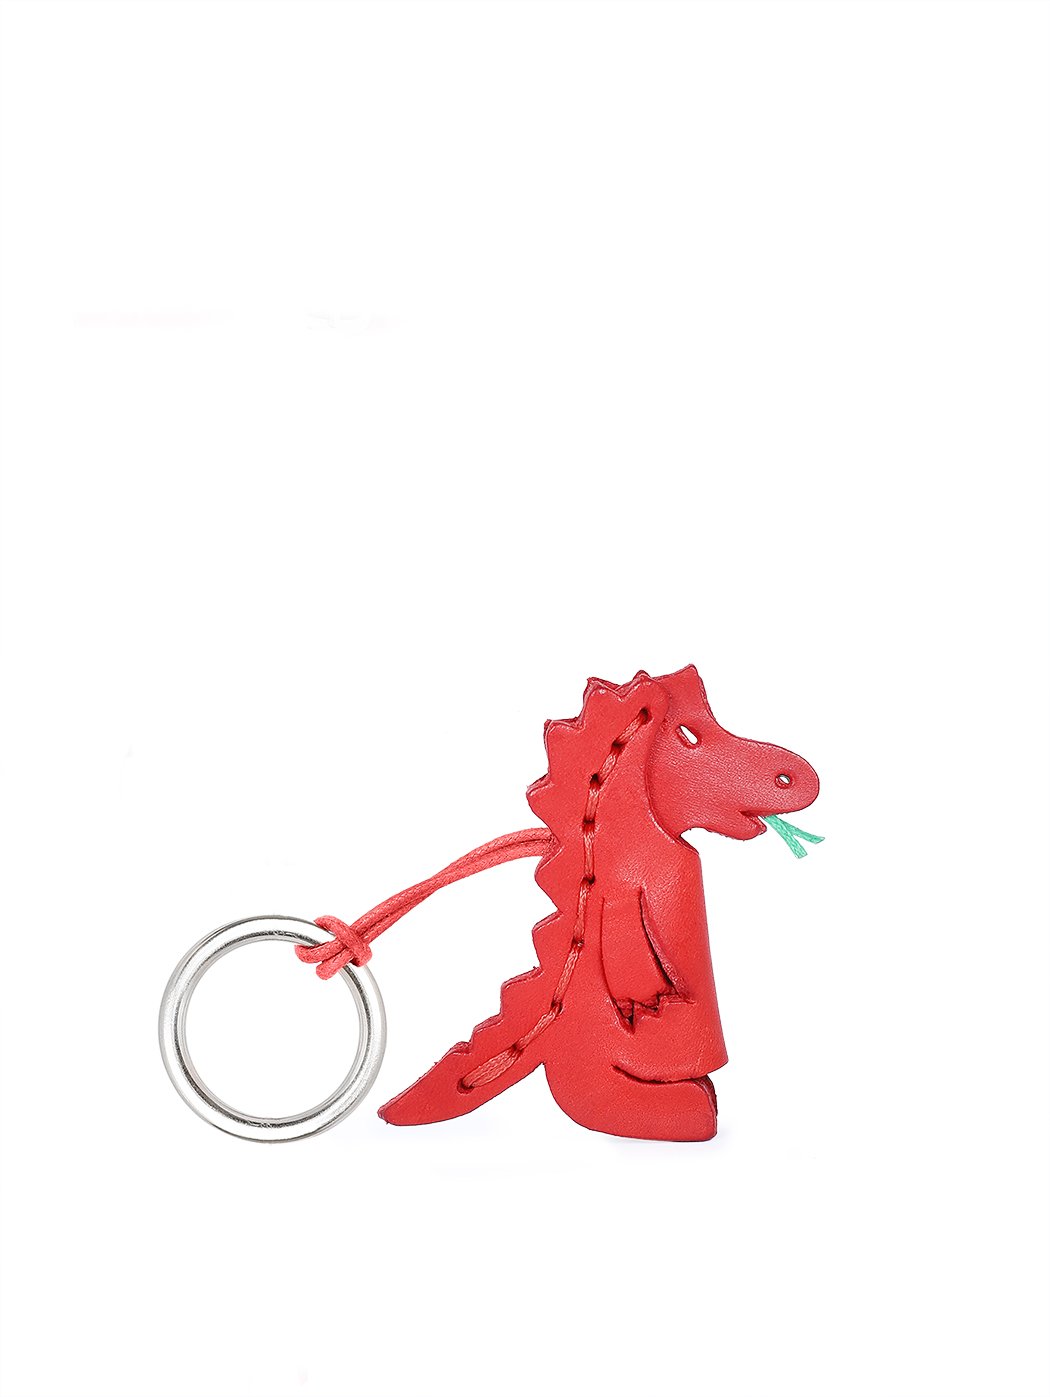 Key Chain - Red Dragon